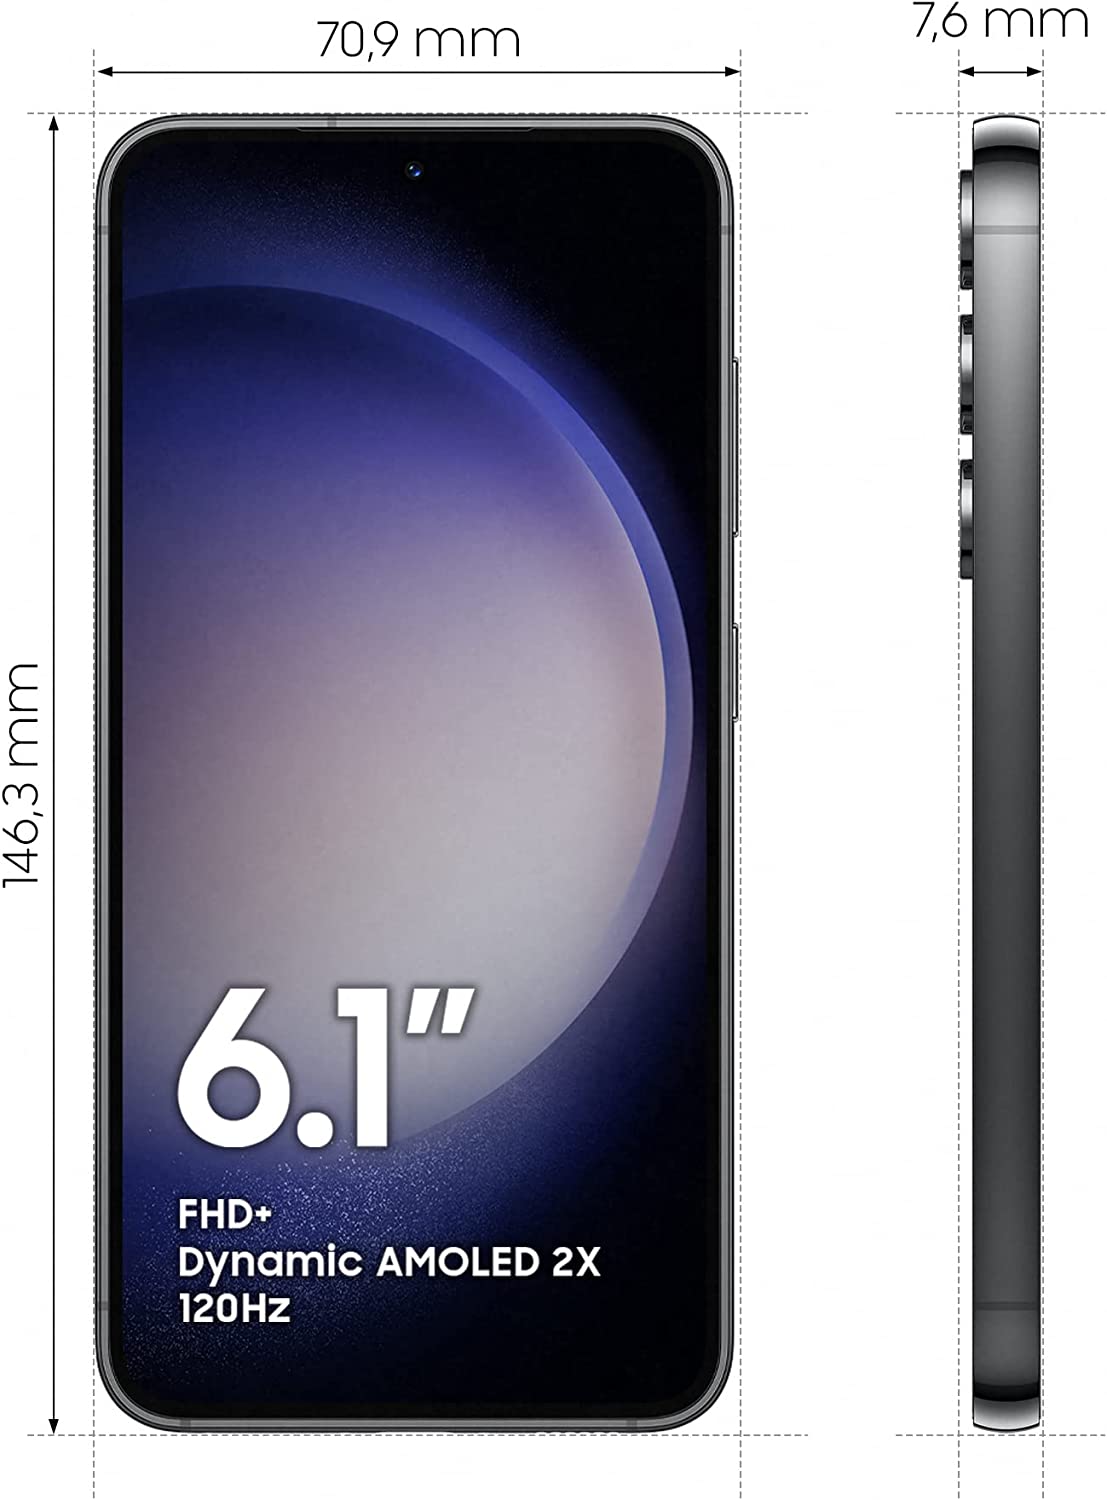 Samsung Galaxy S23 Android Smartphone, 128GB, 3.900mAh Akku, Smartphone - Phantom Black